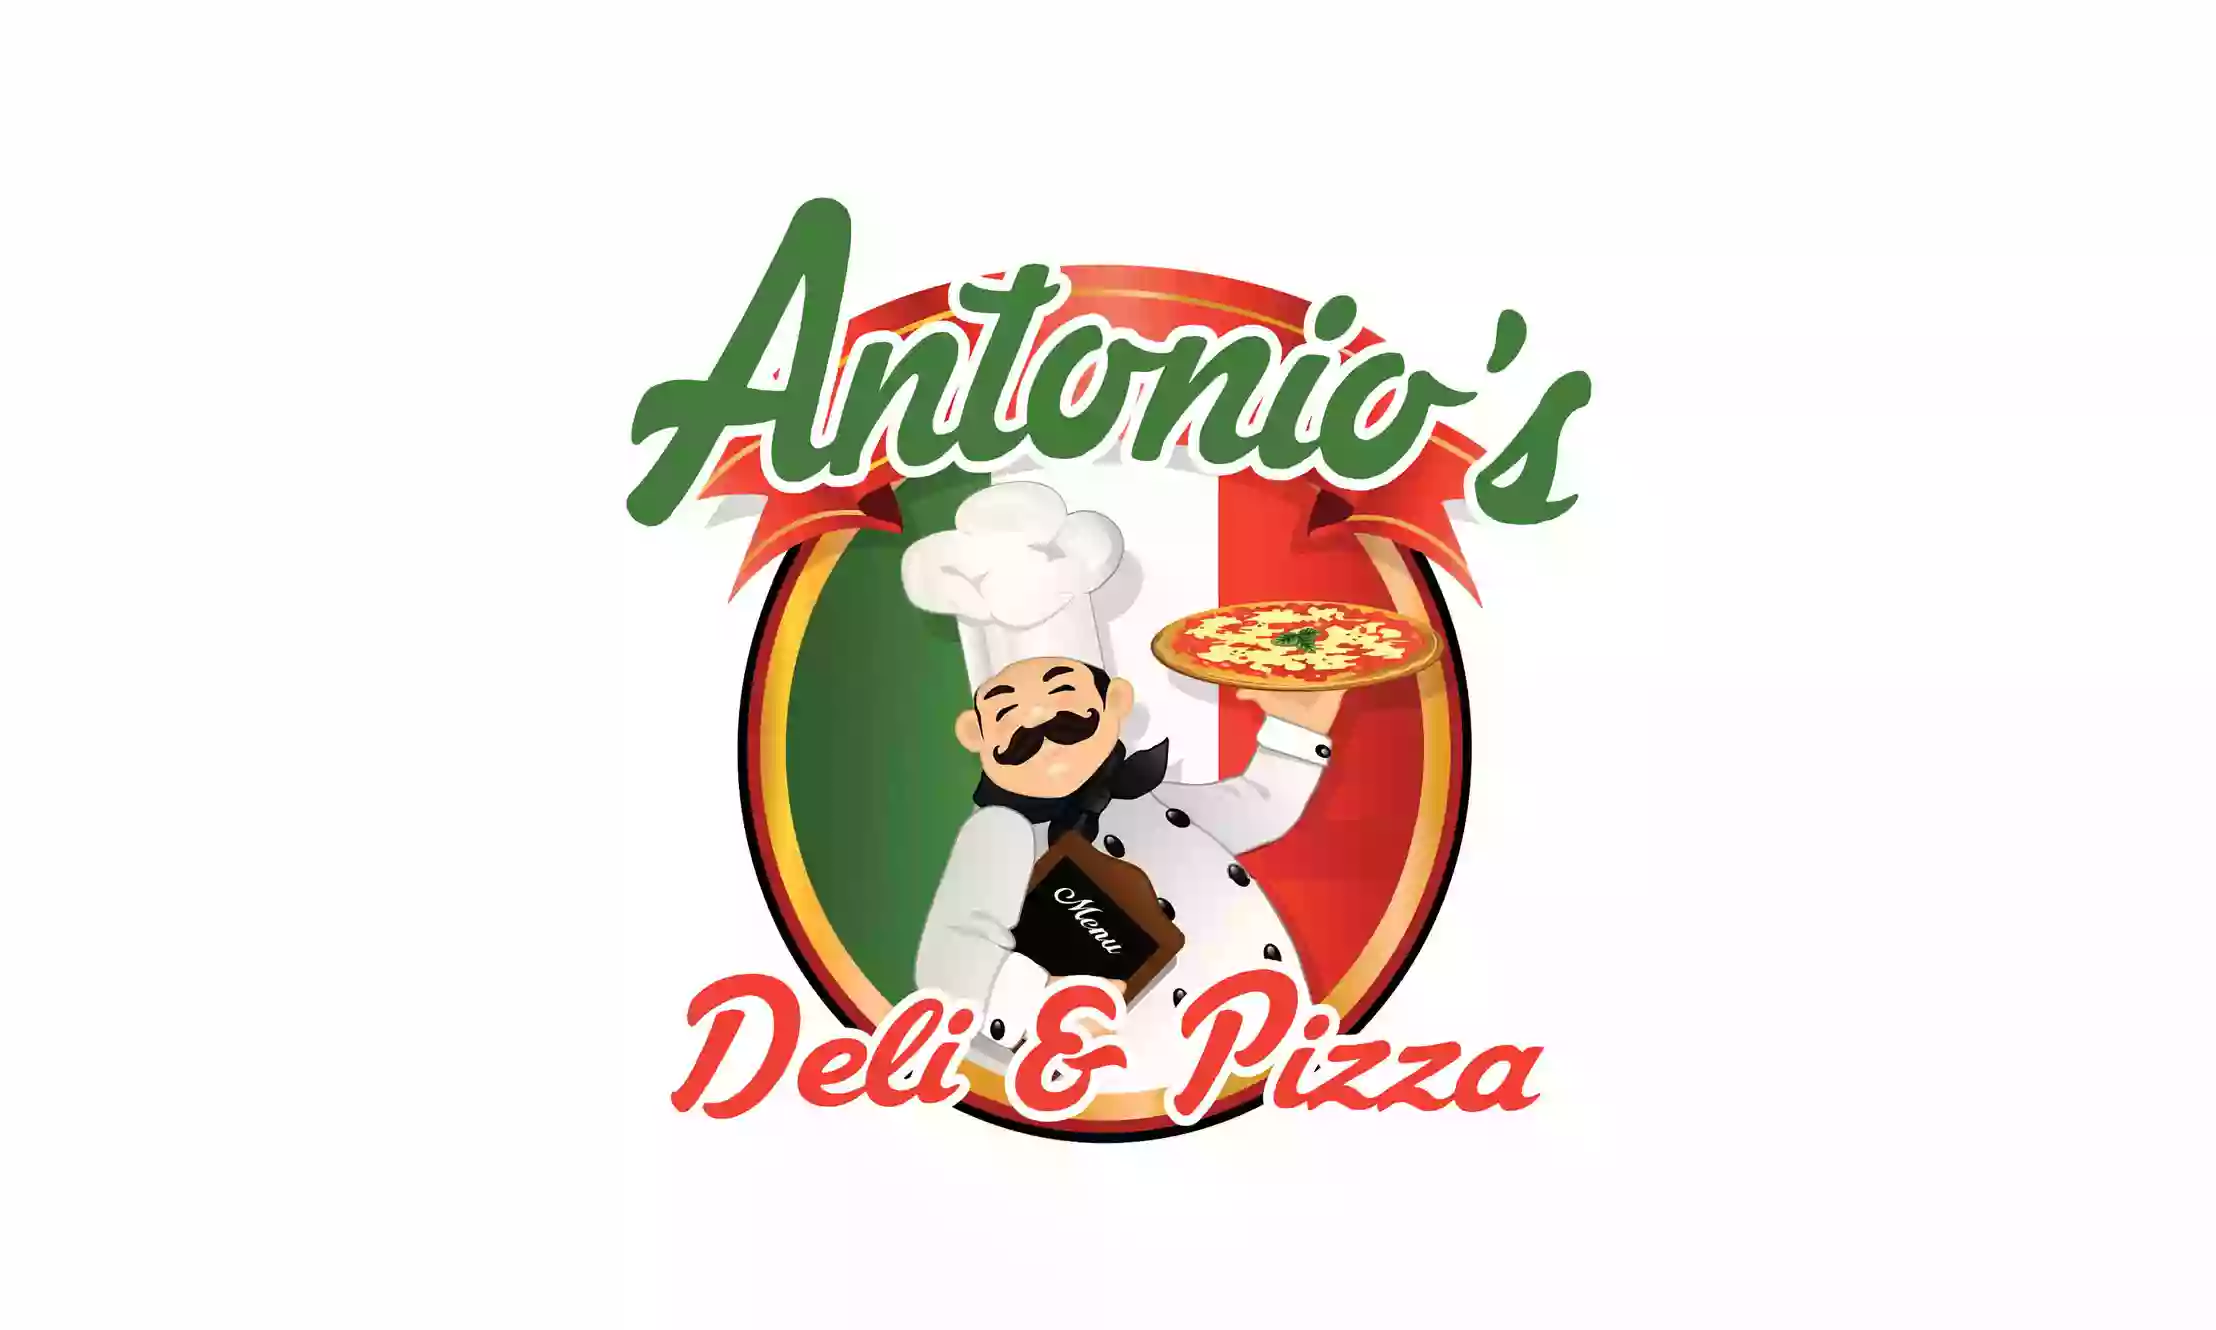 Antonio's Deli and Pizzeria